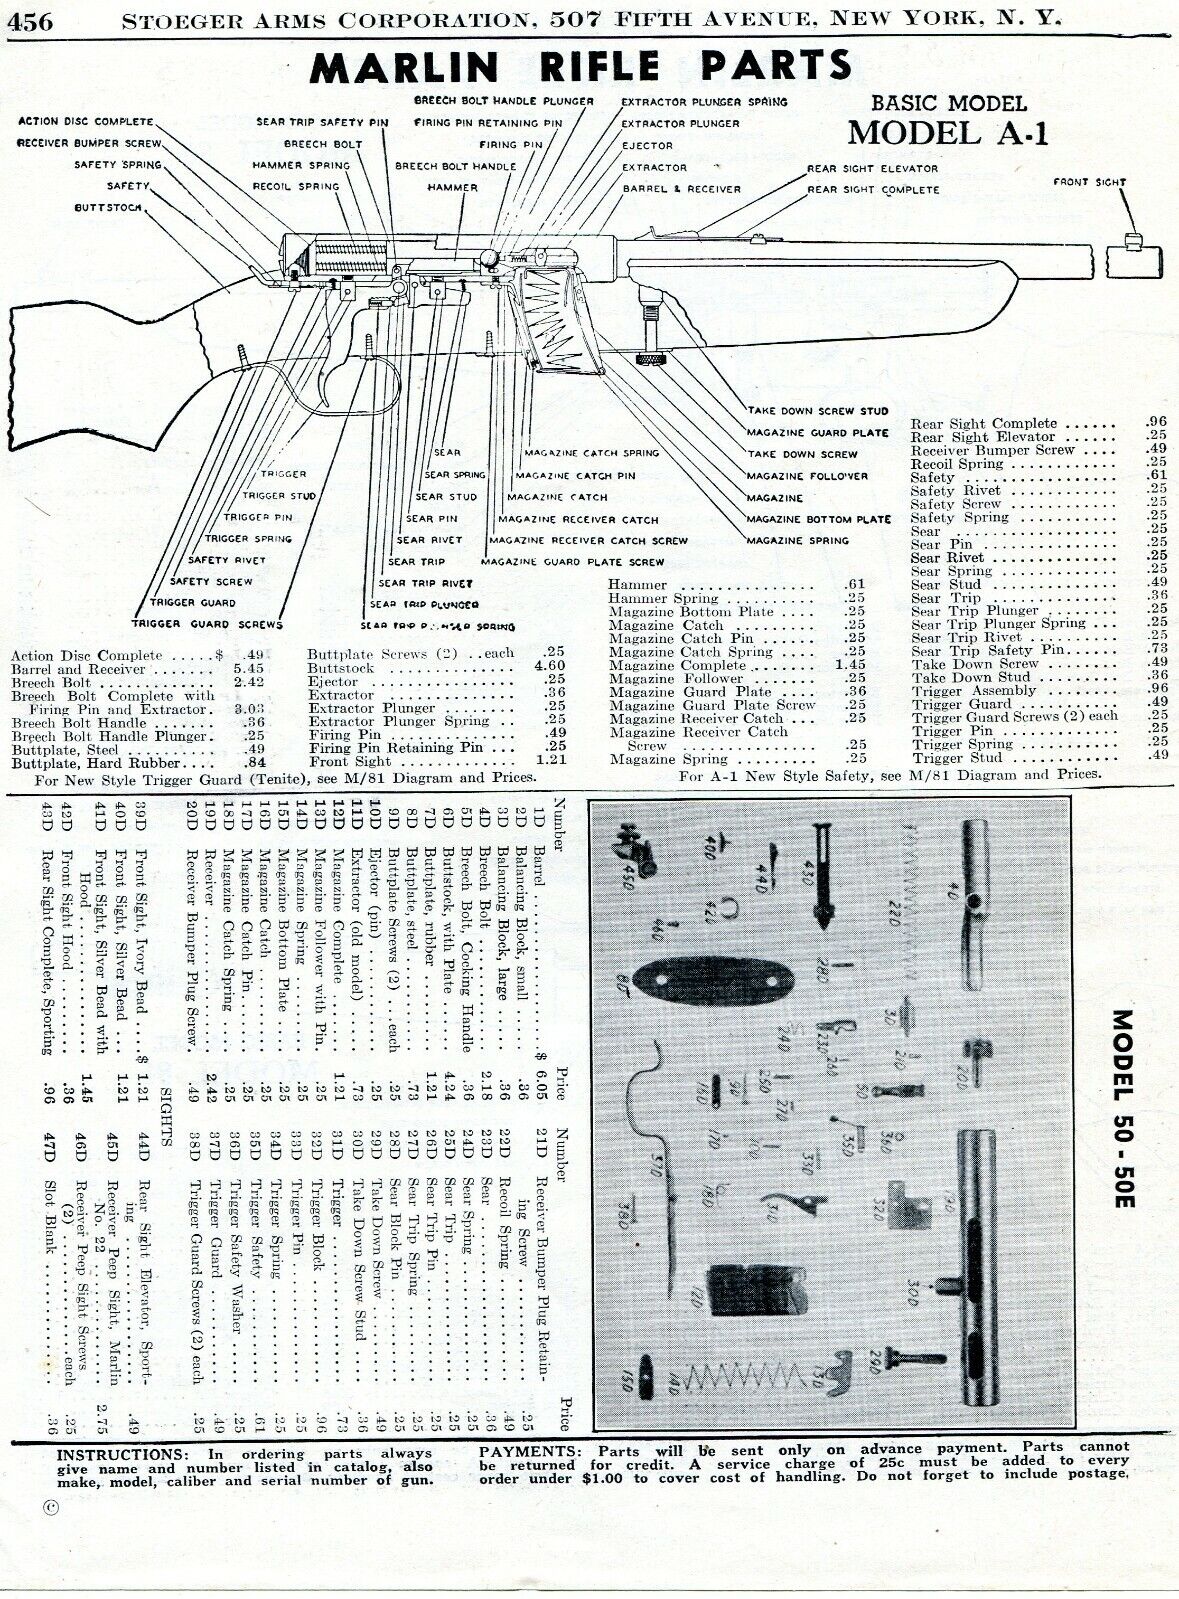 1946 Print Ad of Marlin Model A-1 A1 50 50E Rifle Parts List